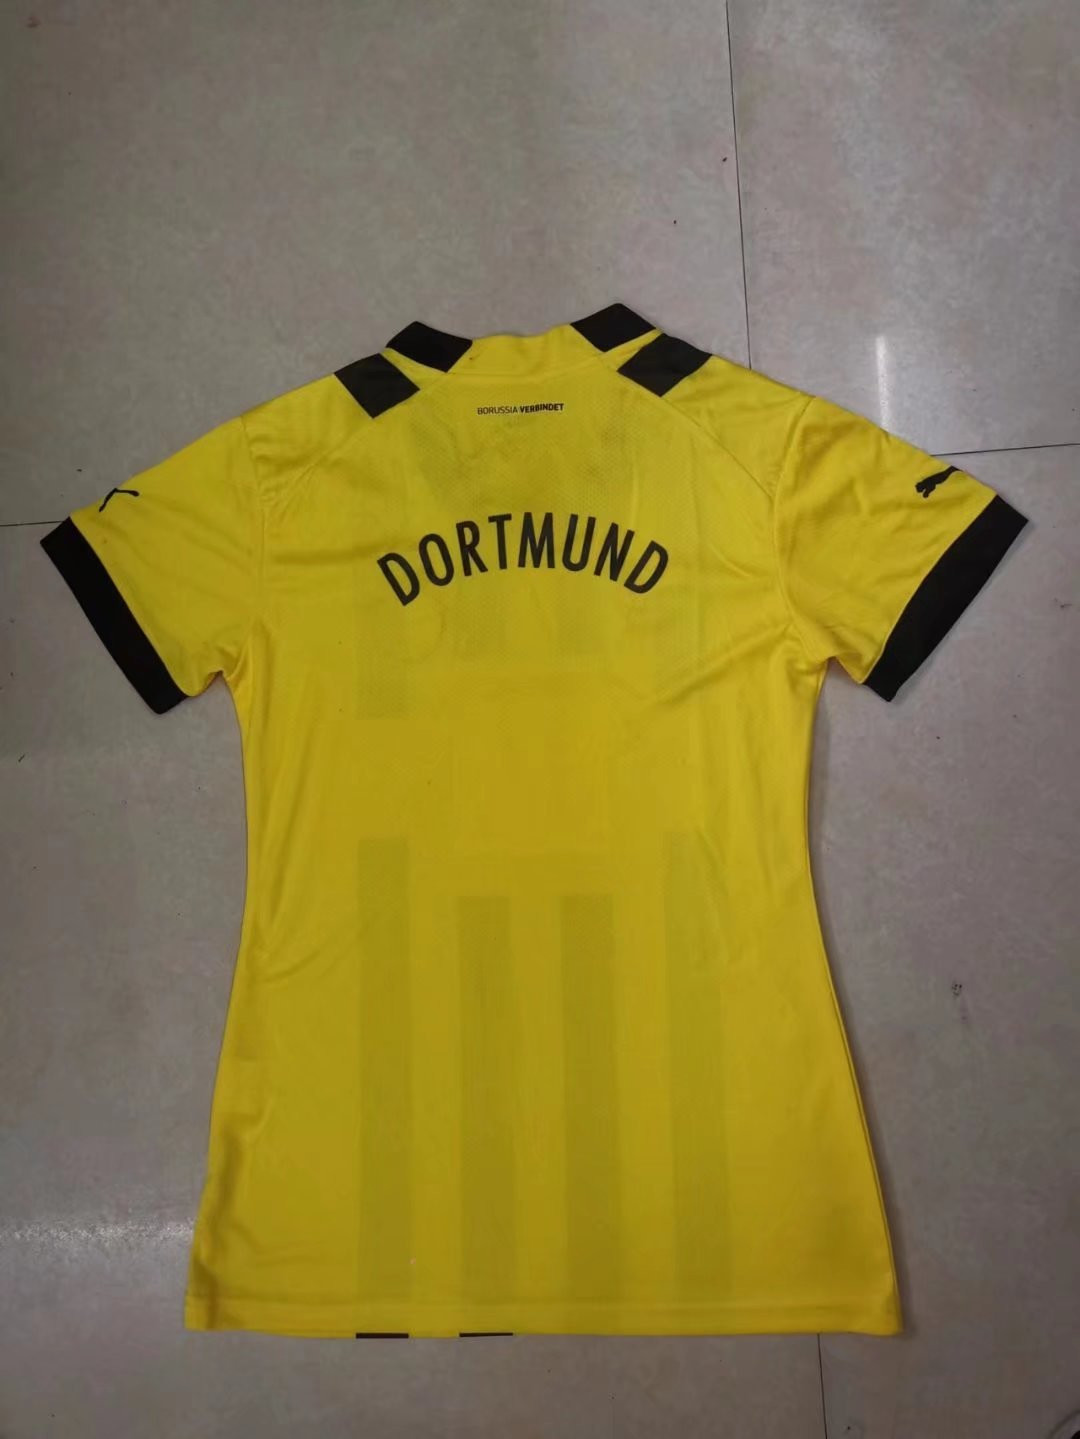 22/23 Borussia Dortmund Home Soccer Jersey Womens